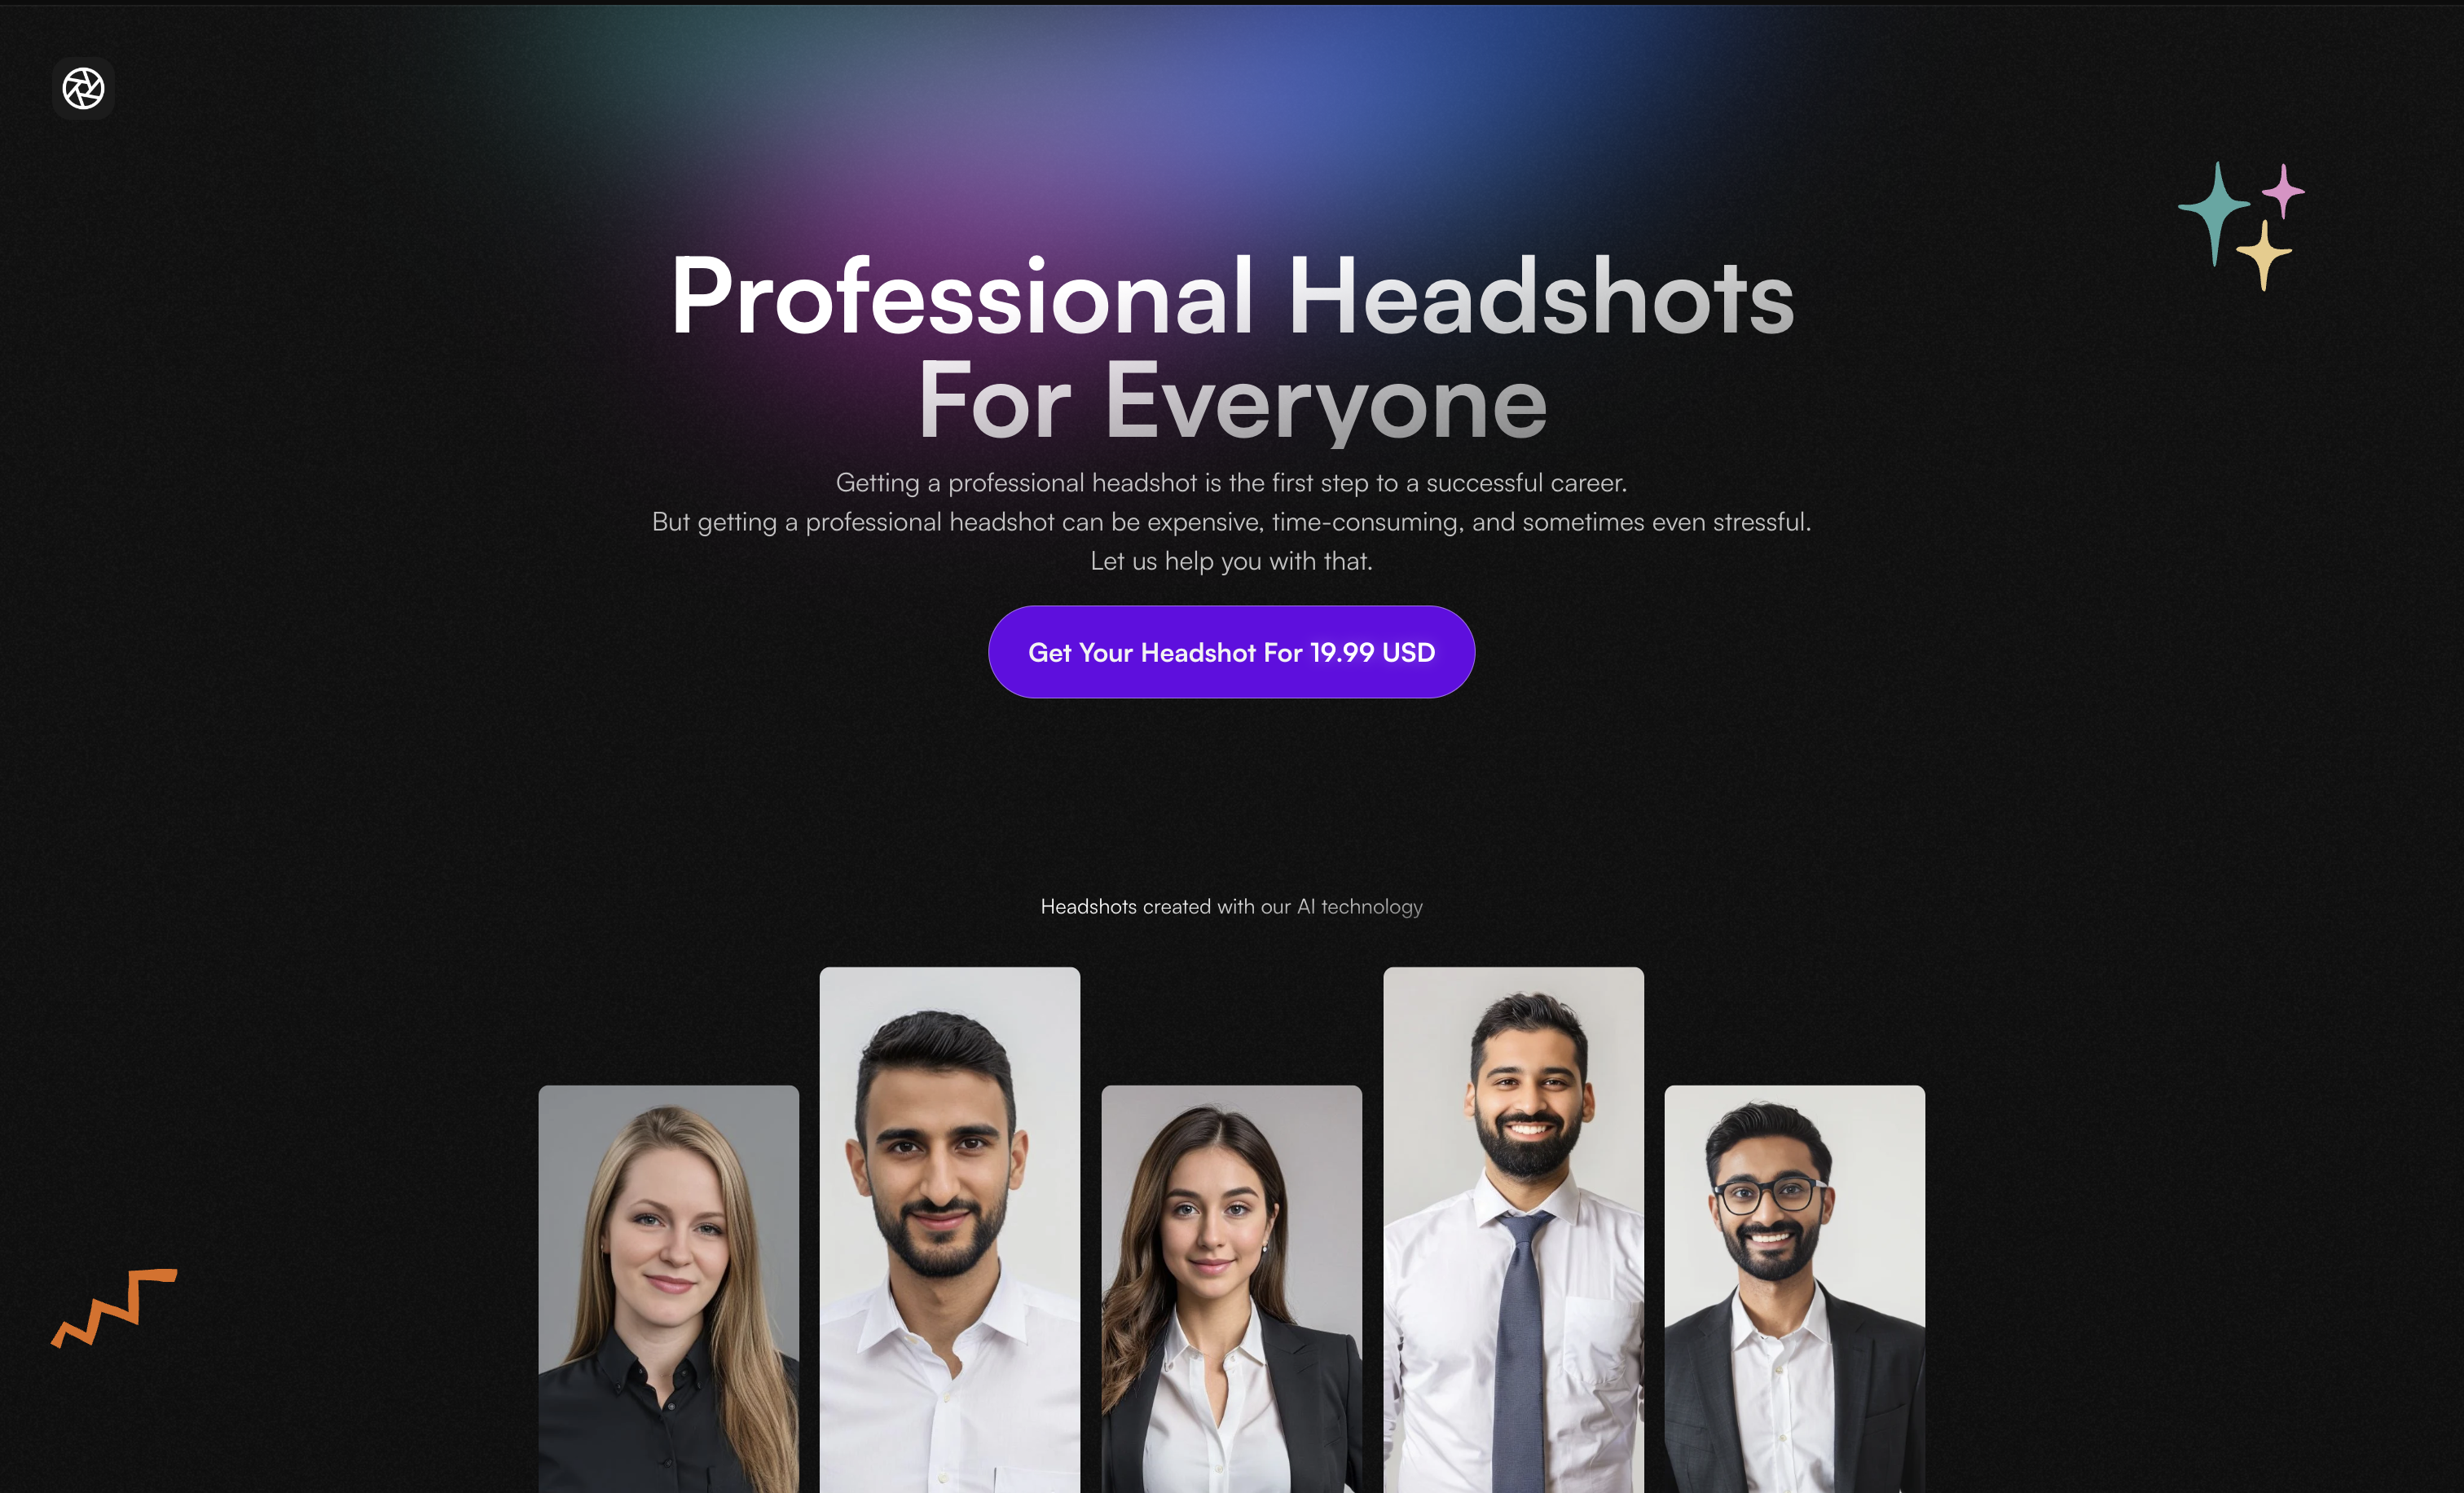 resume-photo-ai - Professional headshots for everyone